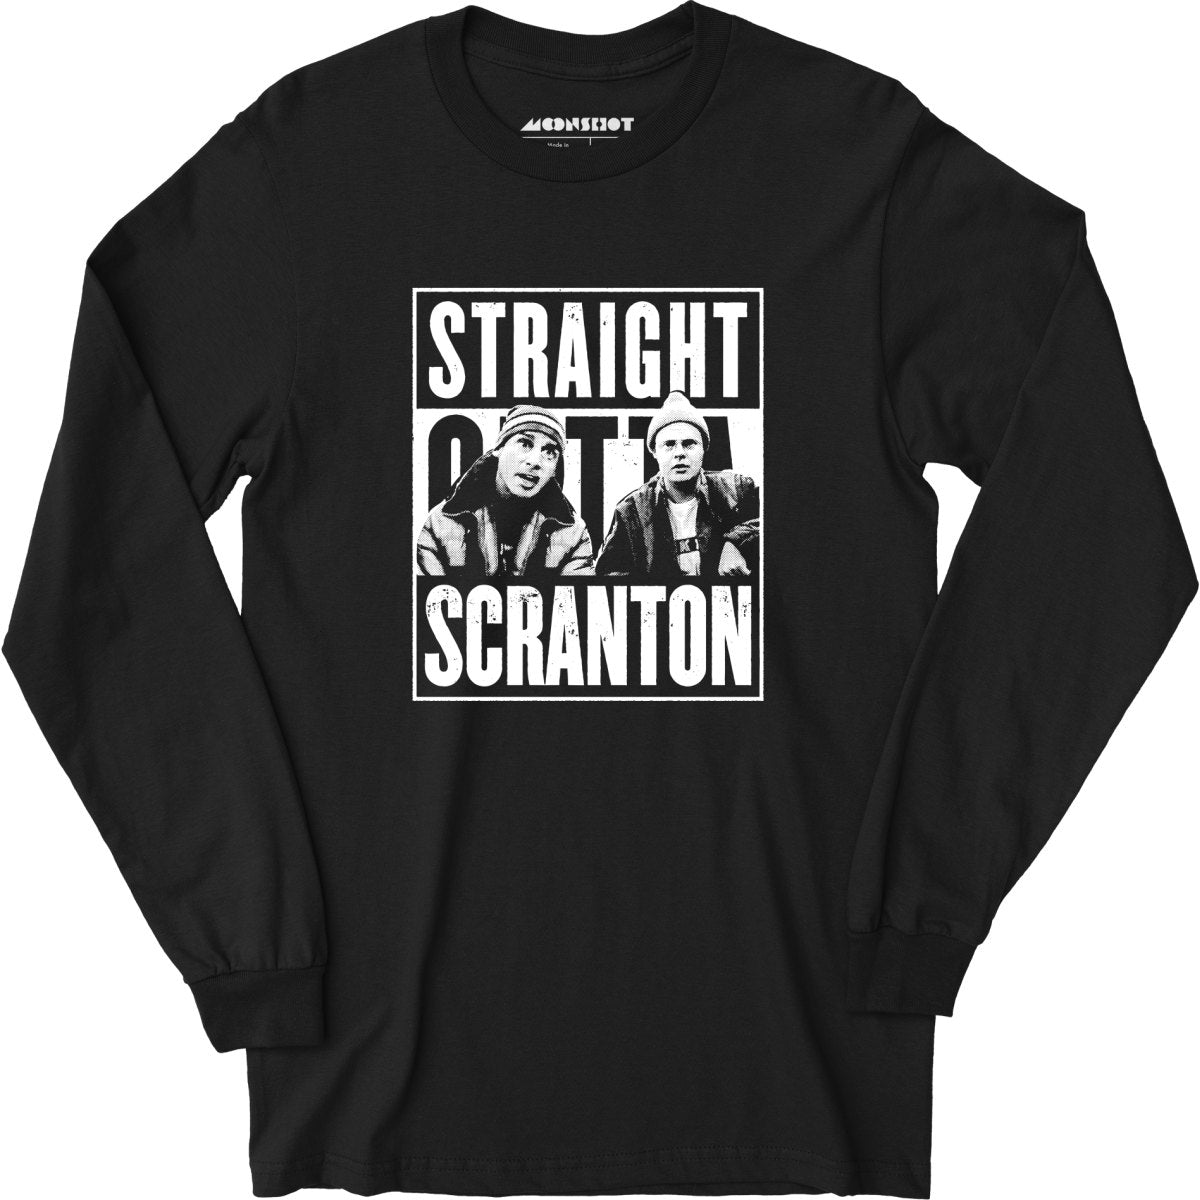 Straight Outta Scranton - Lazy Scranton - Long Sleeve T-Shirt